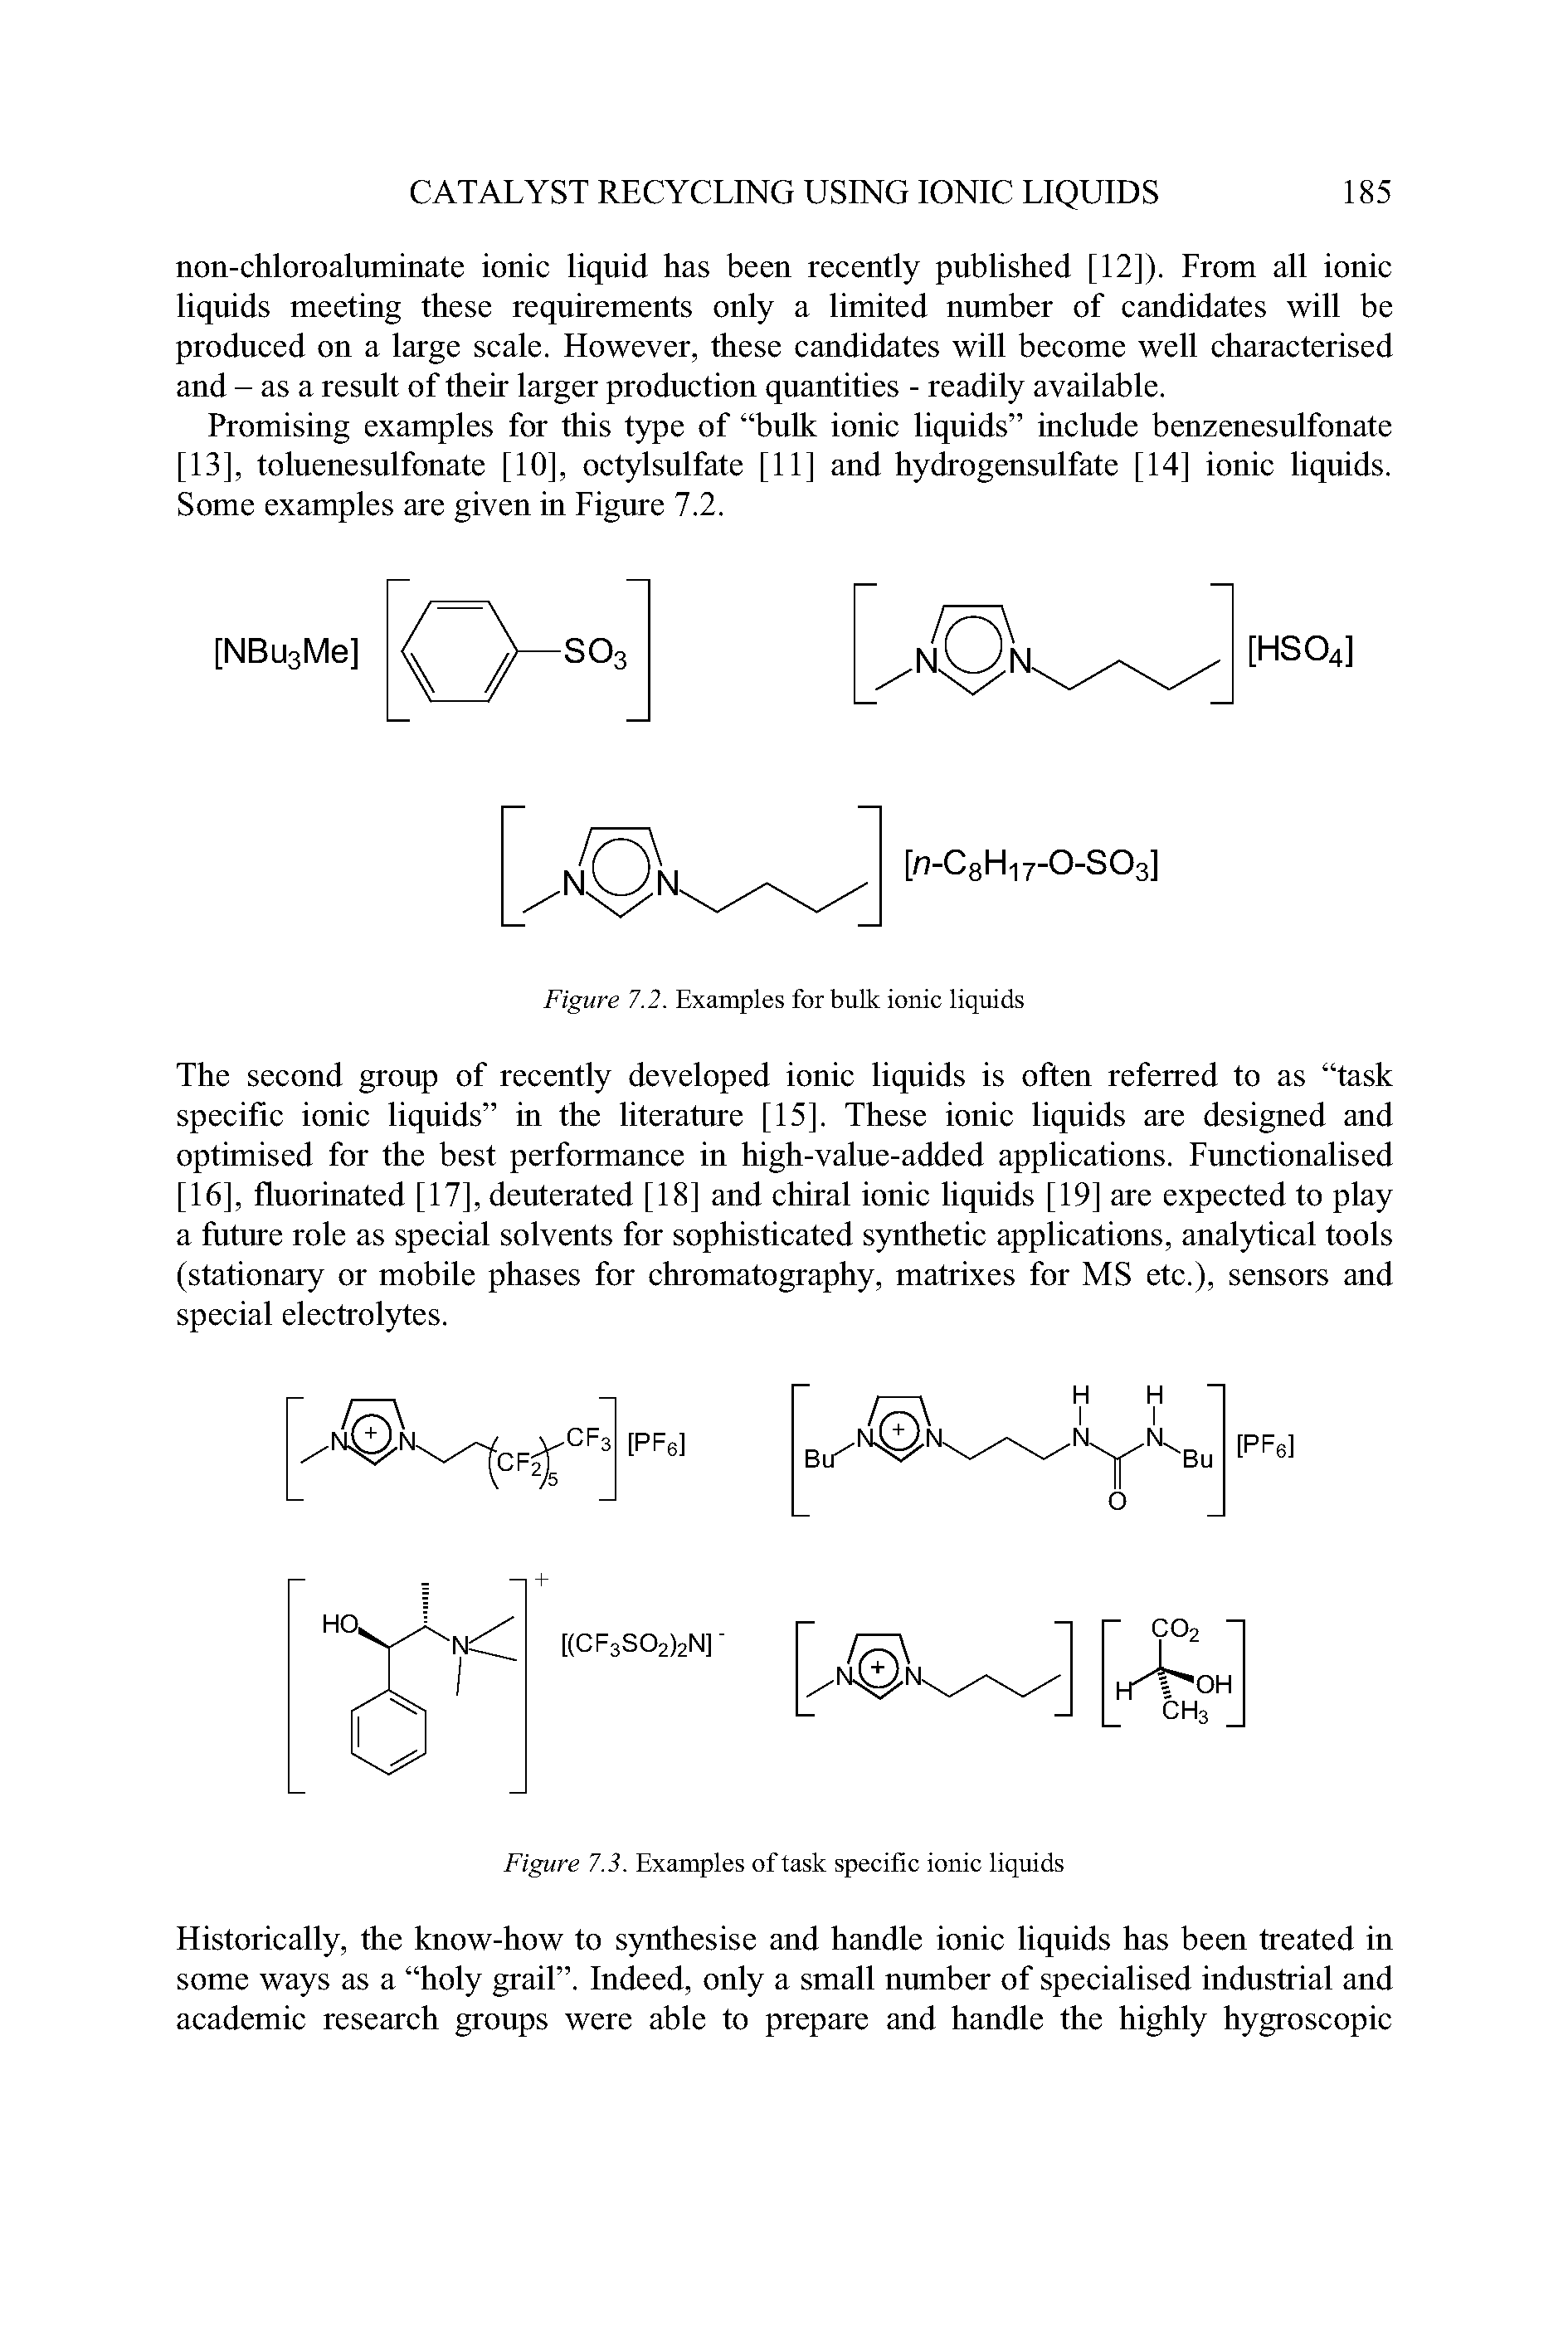 Figure 7.3. Examples of task specific ionic liquids...